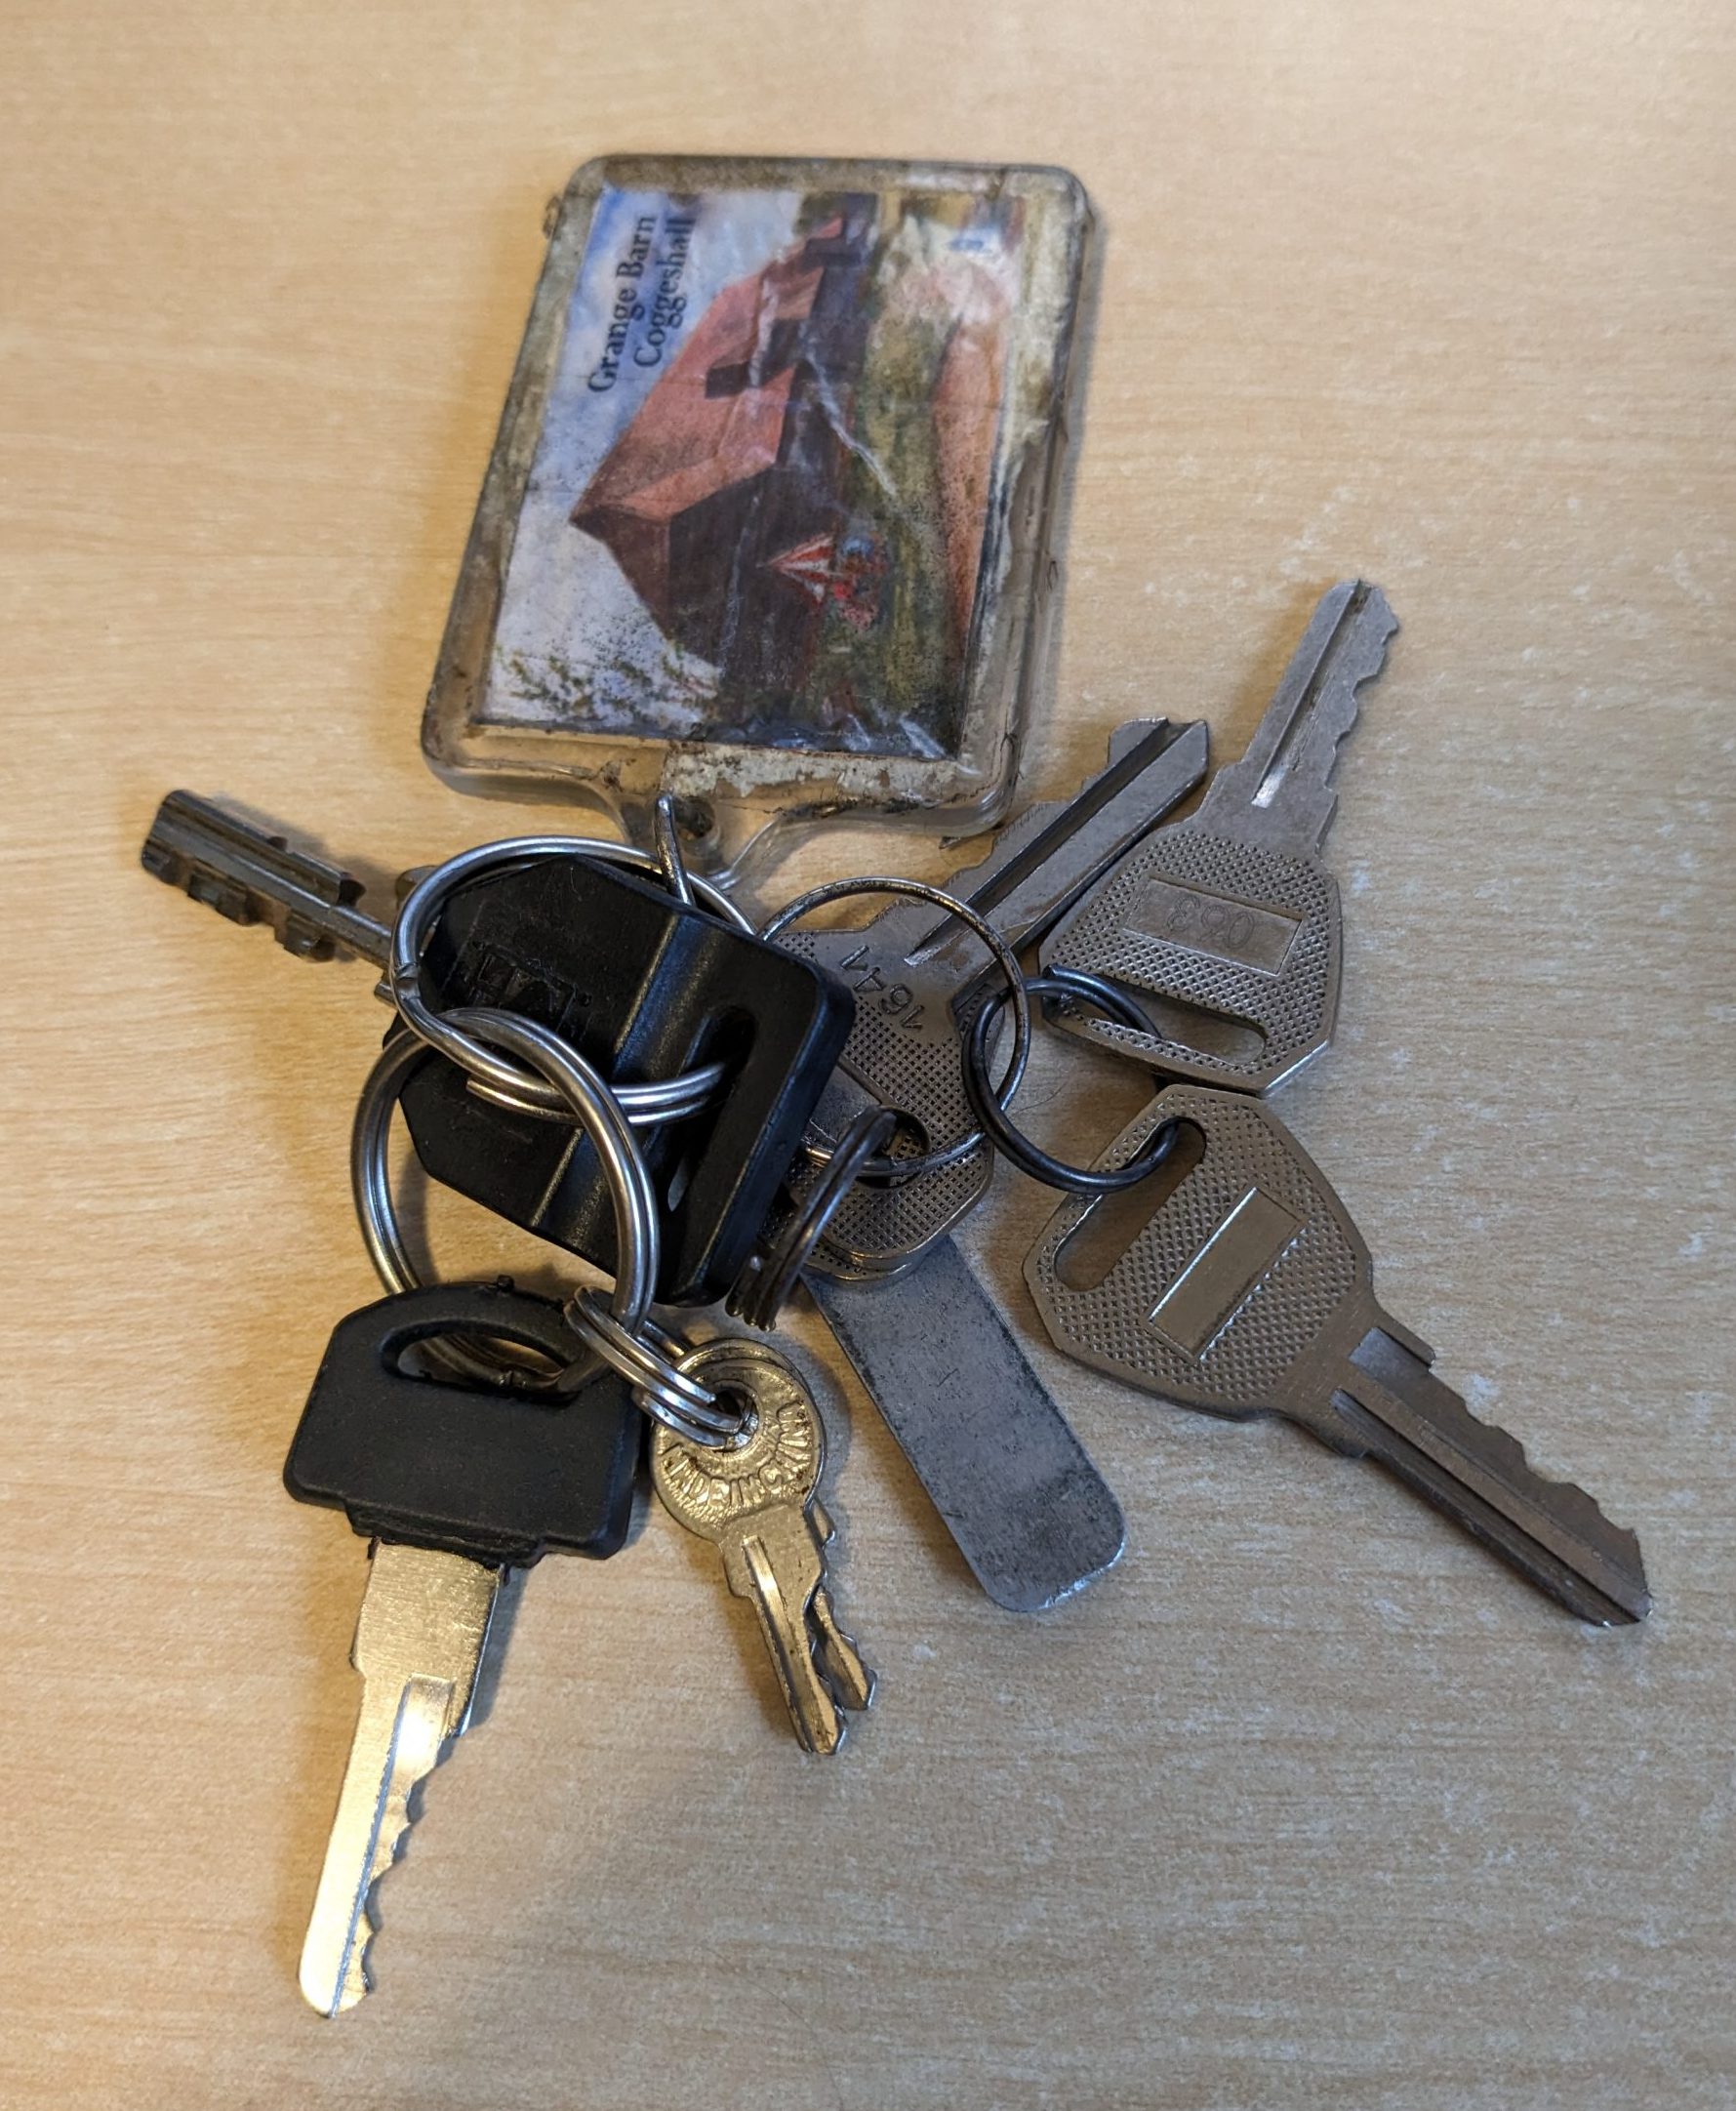 Lost keys